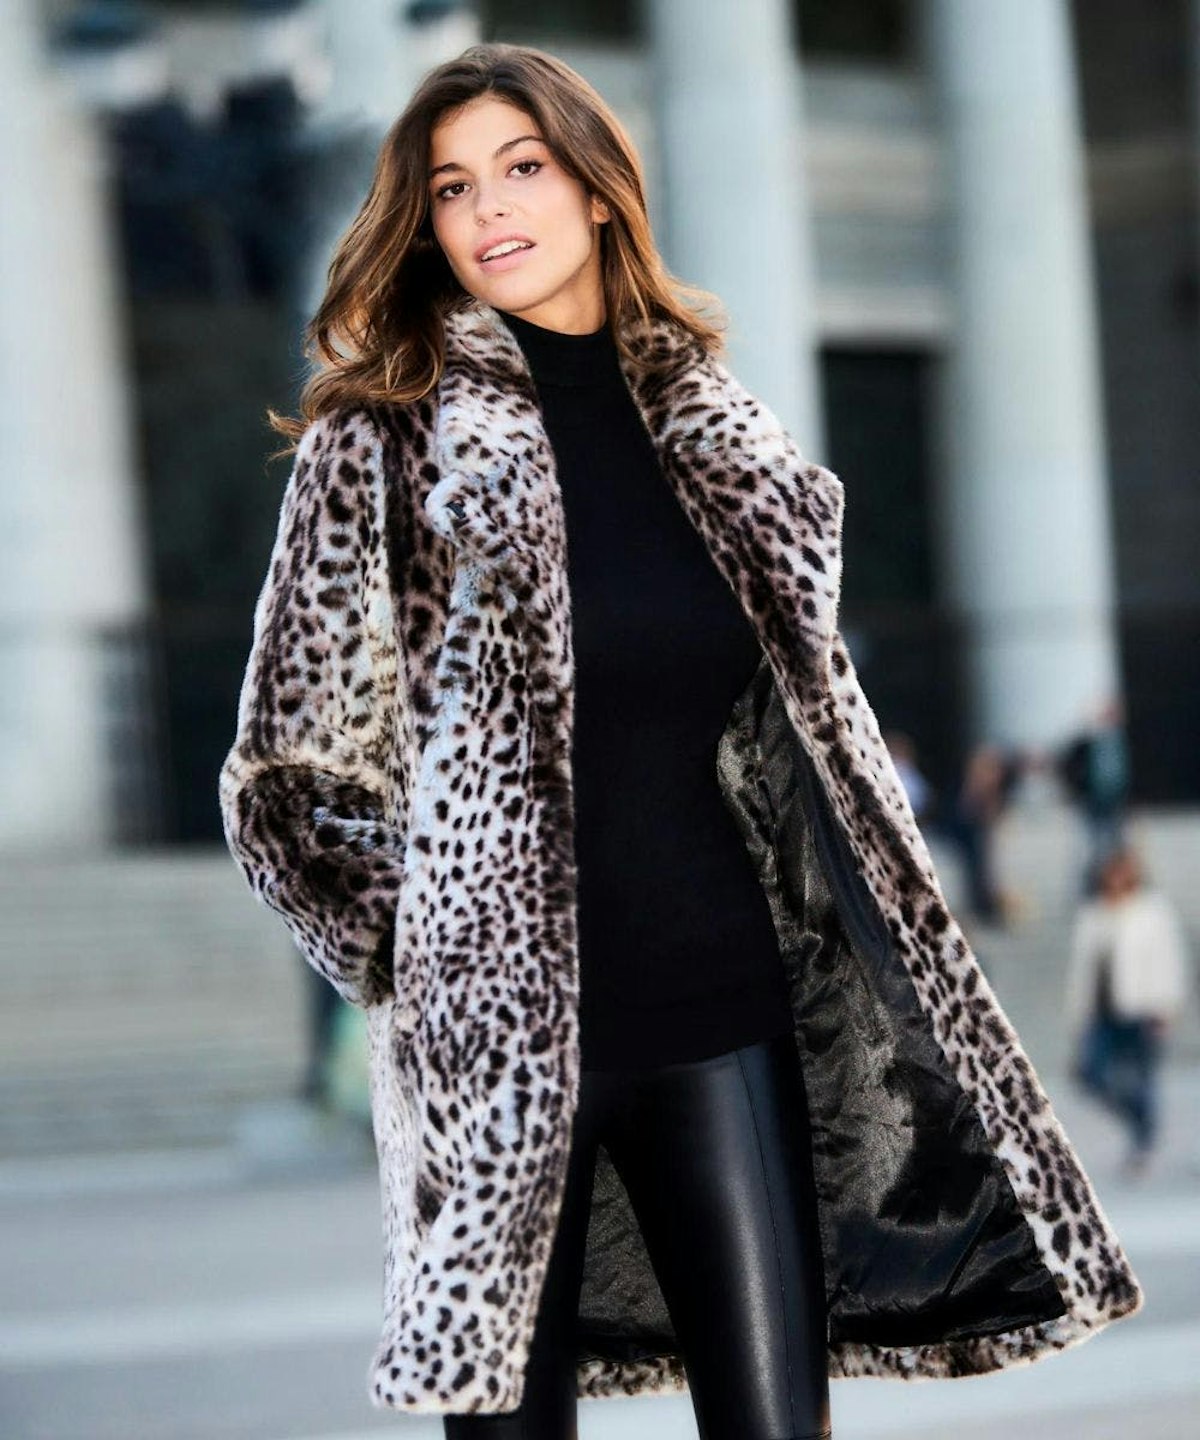 Stylish Leopard Print Coats We’re Loving This Autumn